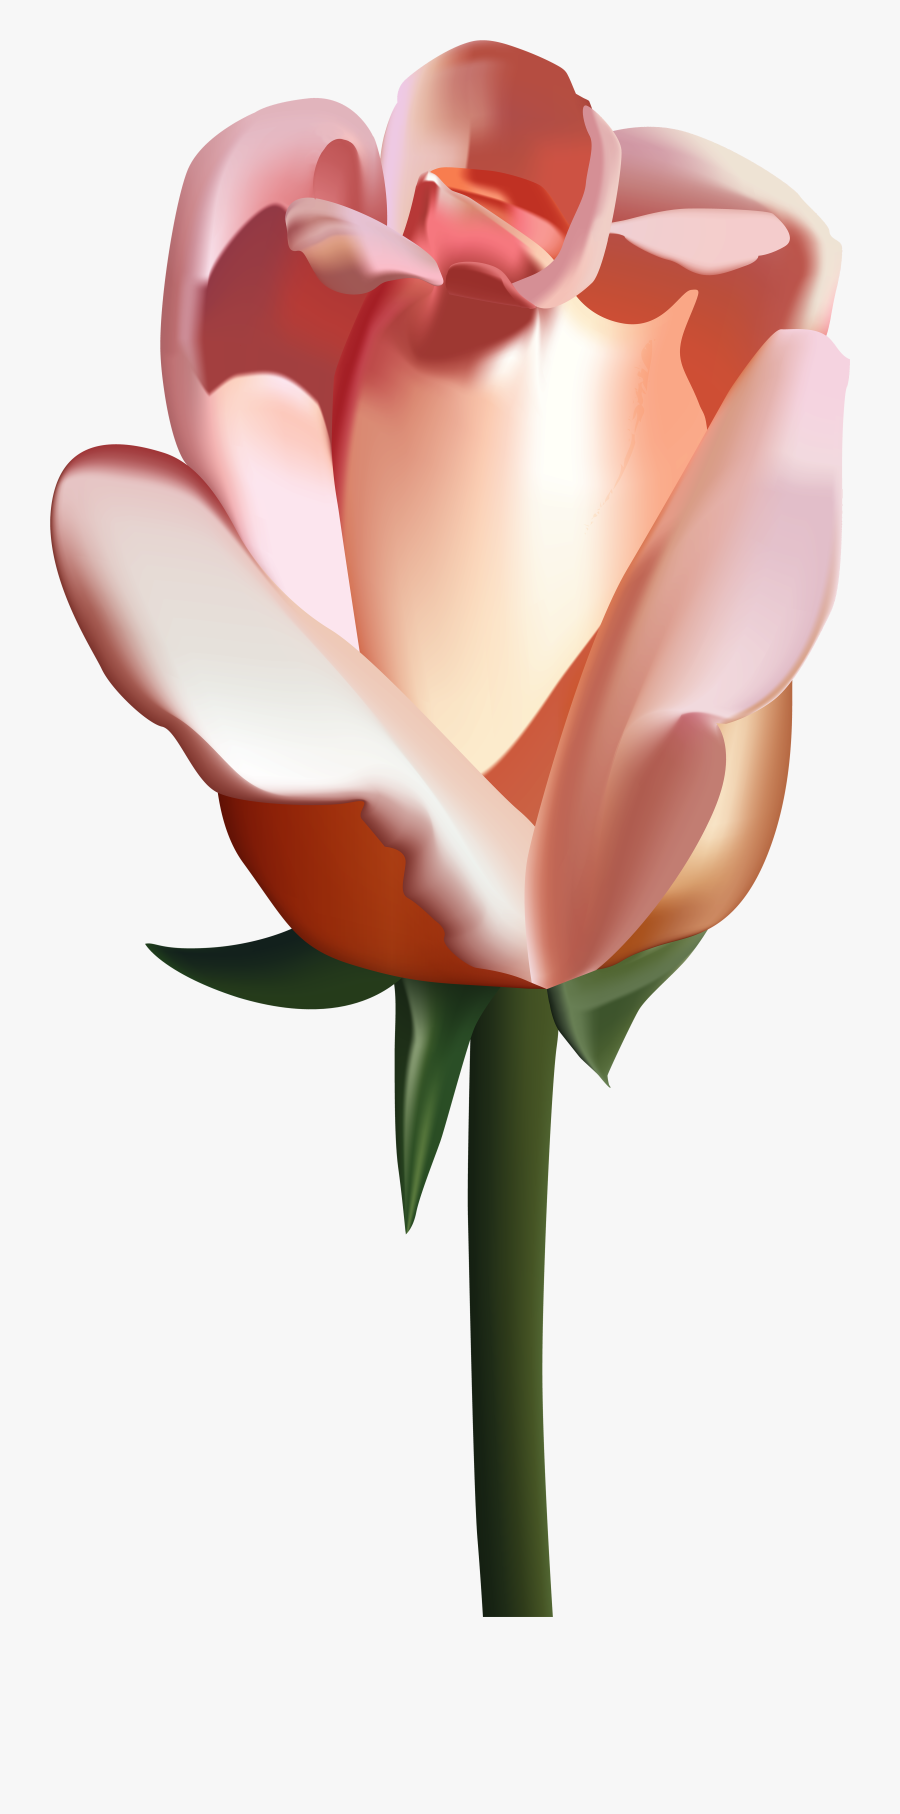 Peach Rose Png Clip Art Image - Peach Rose Png, Transparent Clipart